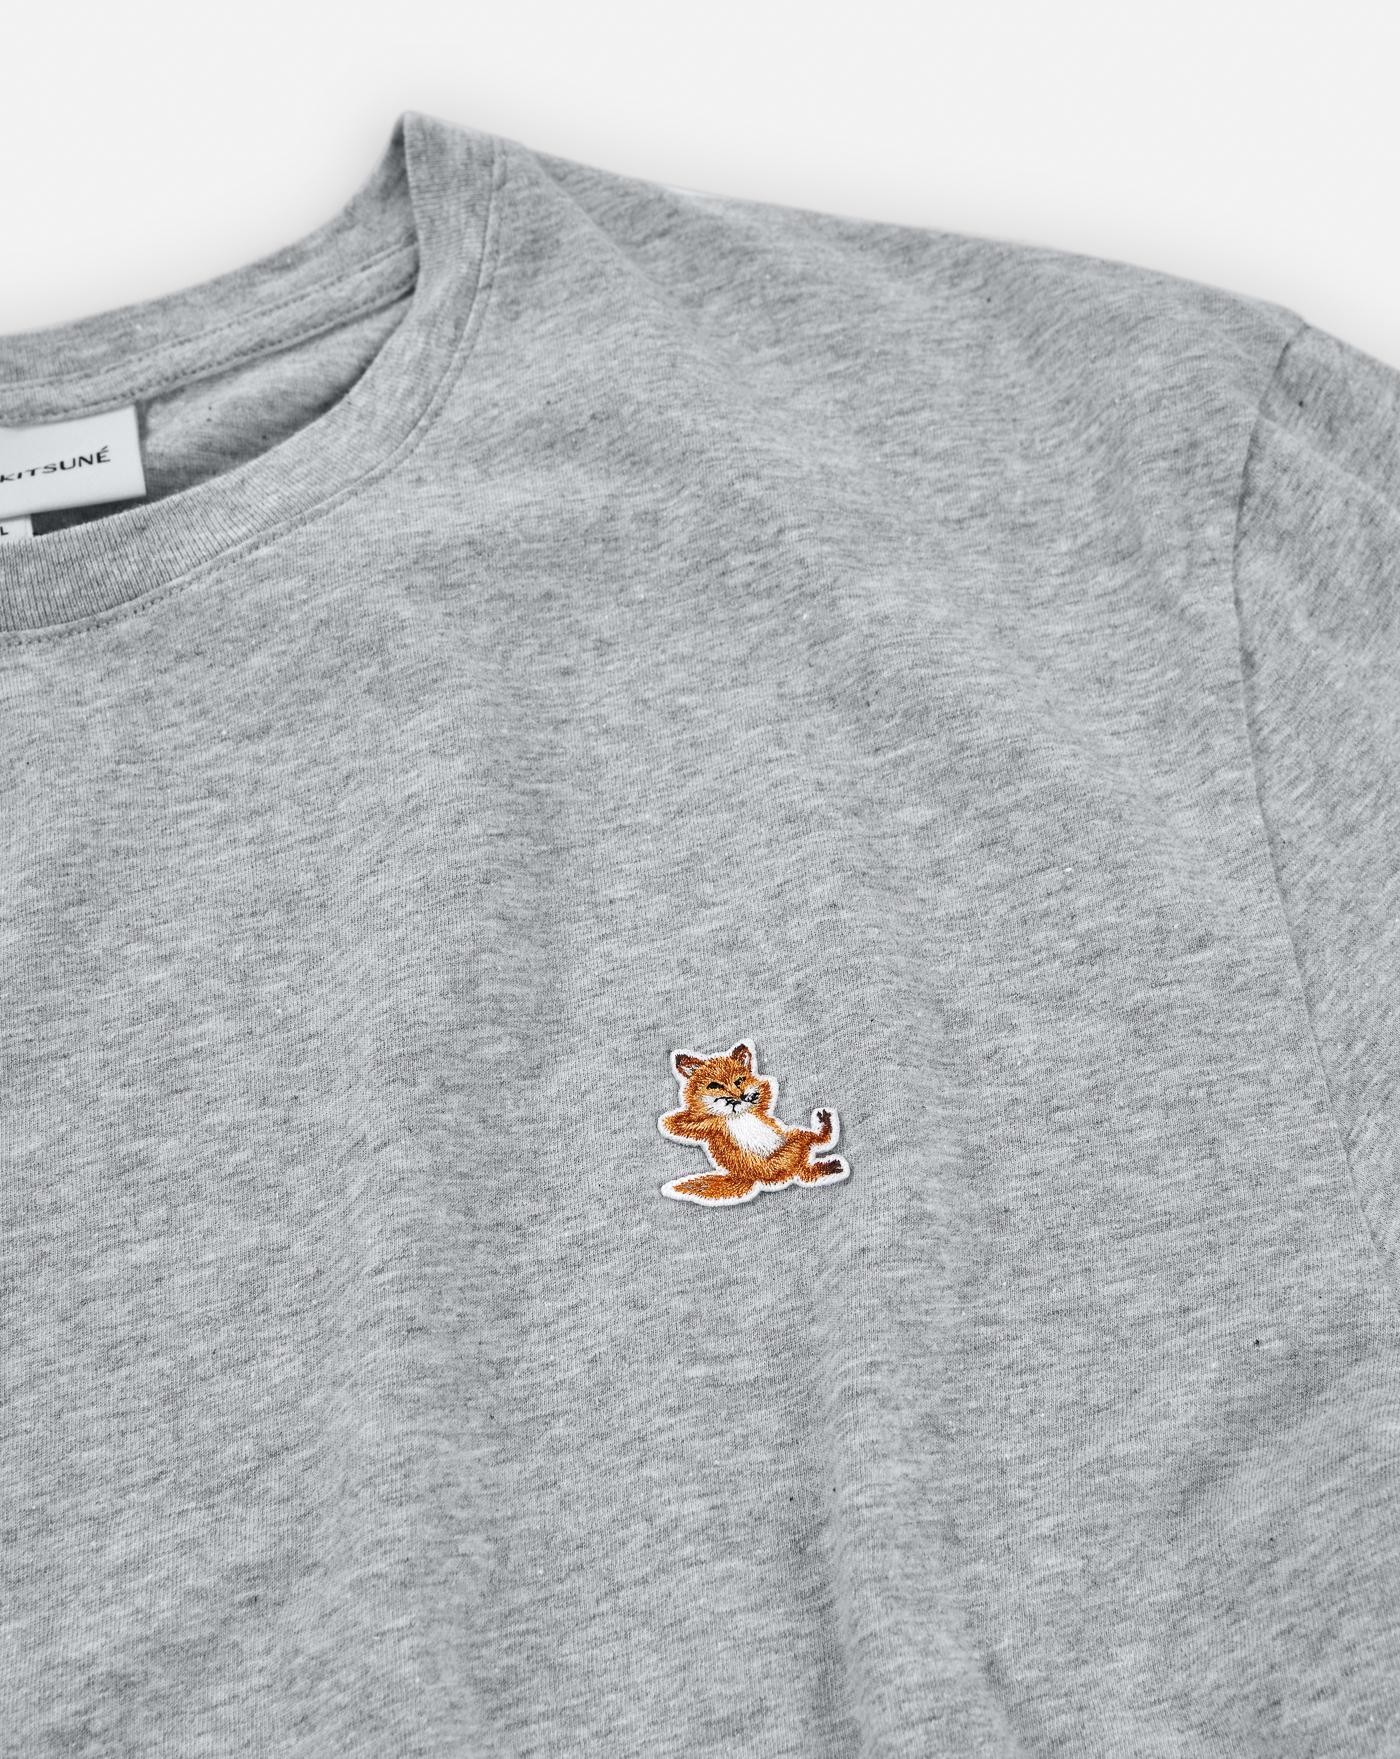 Camiseta Maison Kitsune Chillax Fox Patch 2